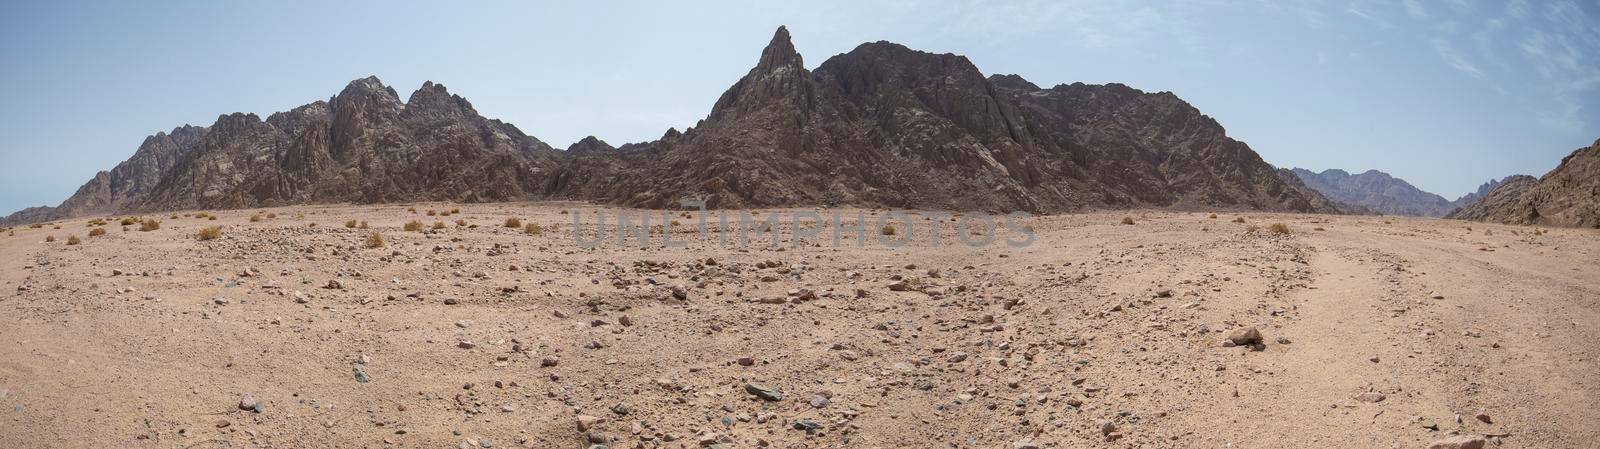 Panoramic view of barren desert landscape in hot climate by paulvinten